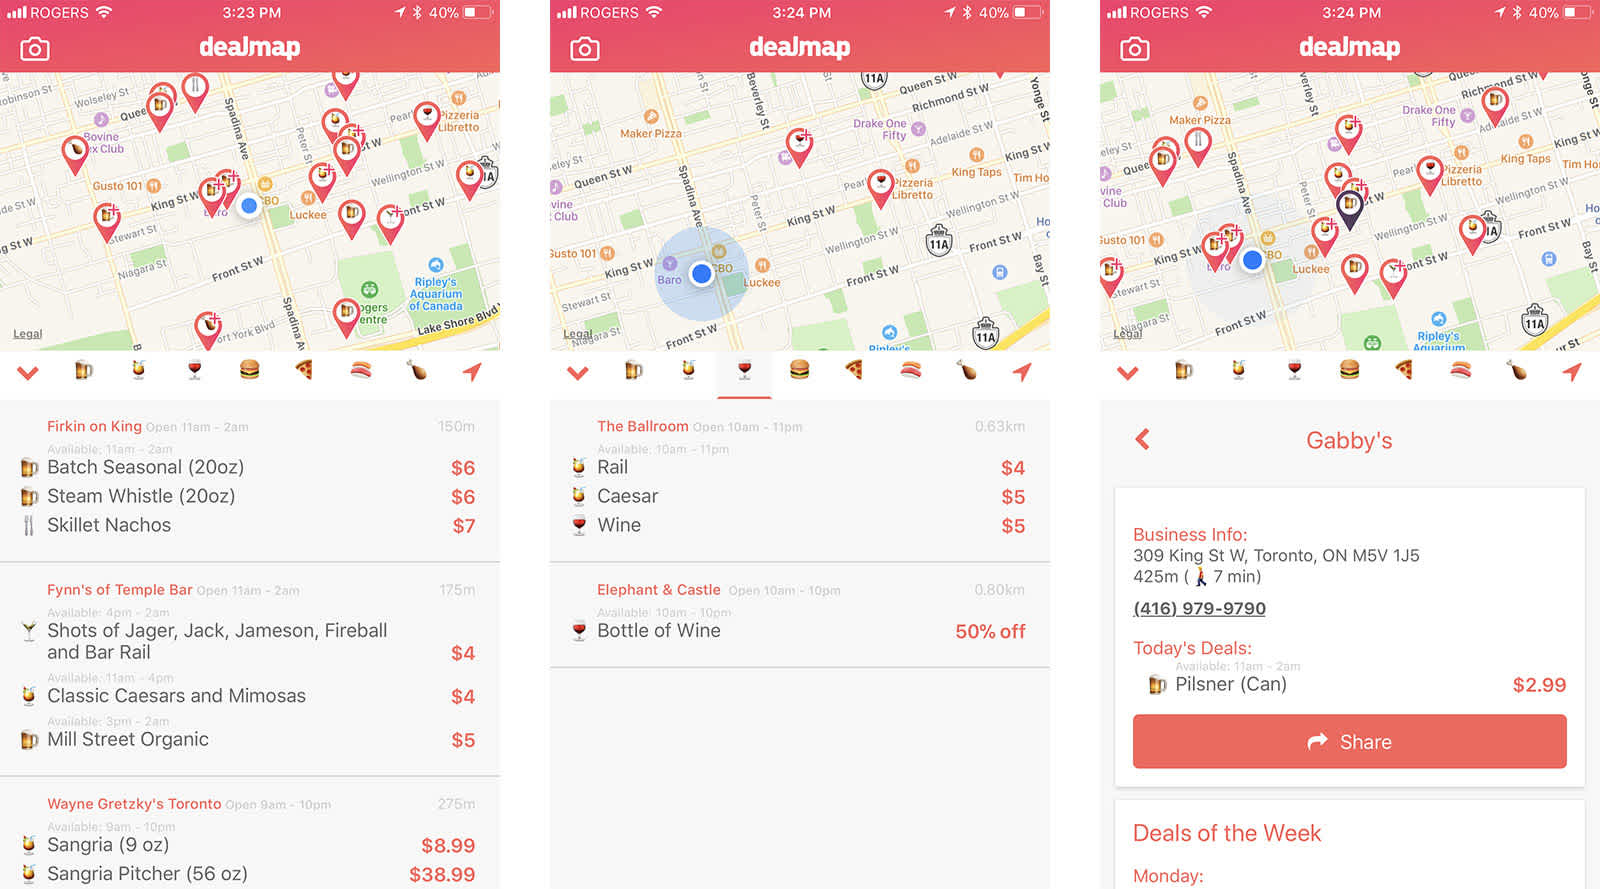 Three screenshots of the Dealmap app